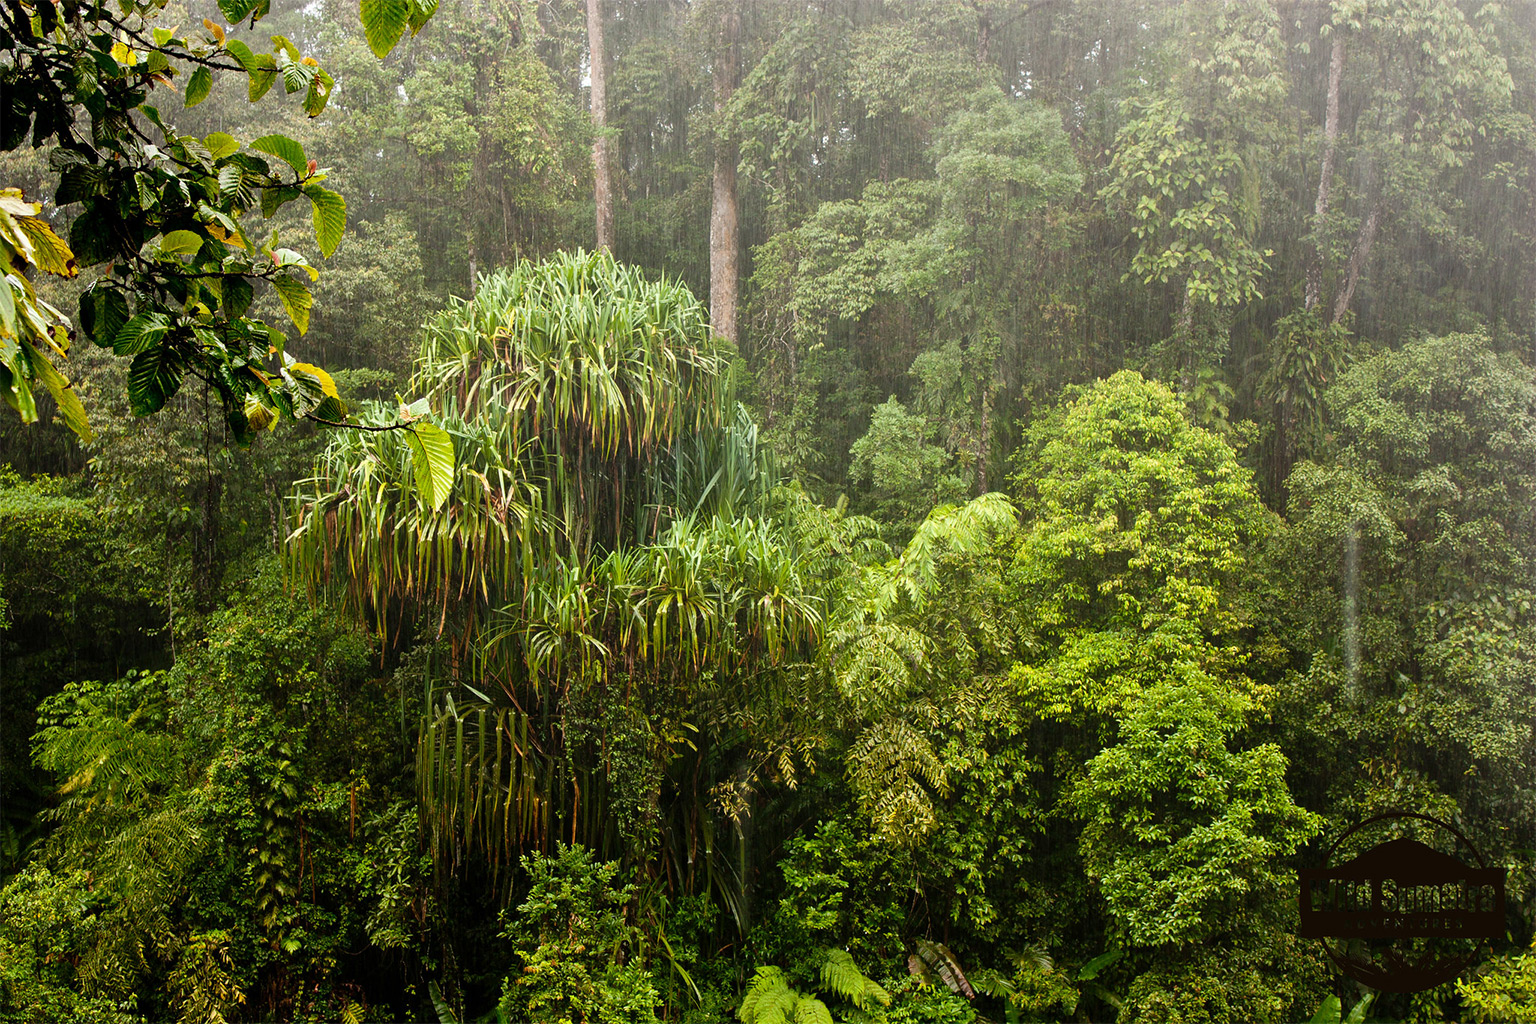 The Kerinci Seblat rainforest